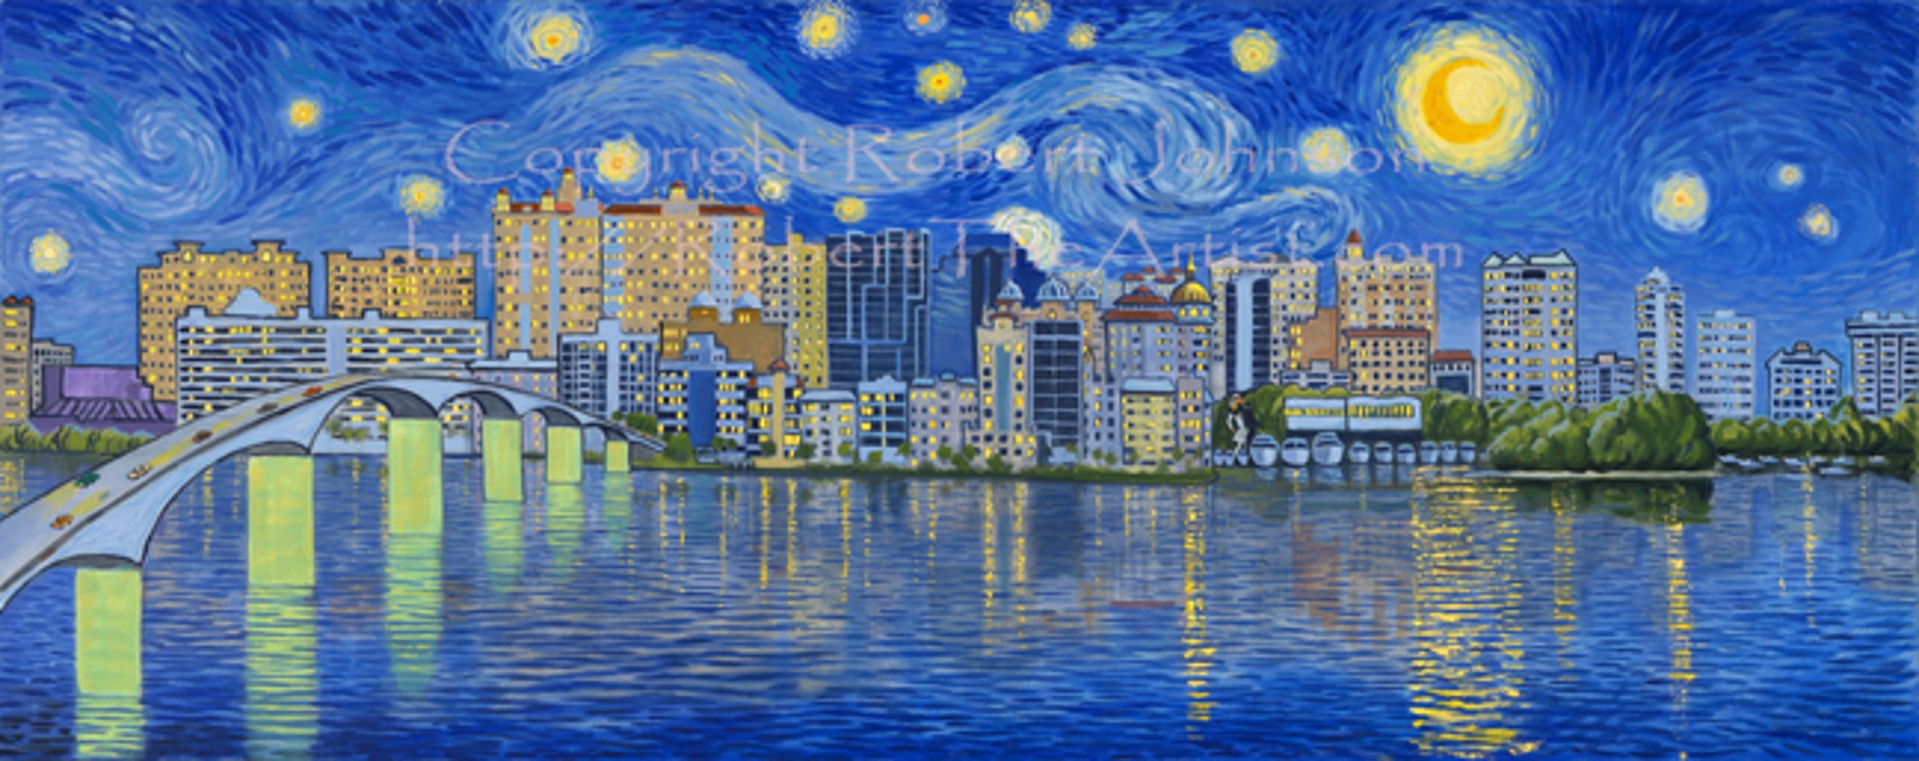 Starry Night SRQ by Robert Johnson